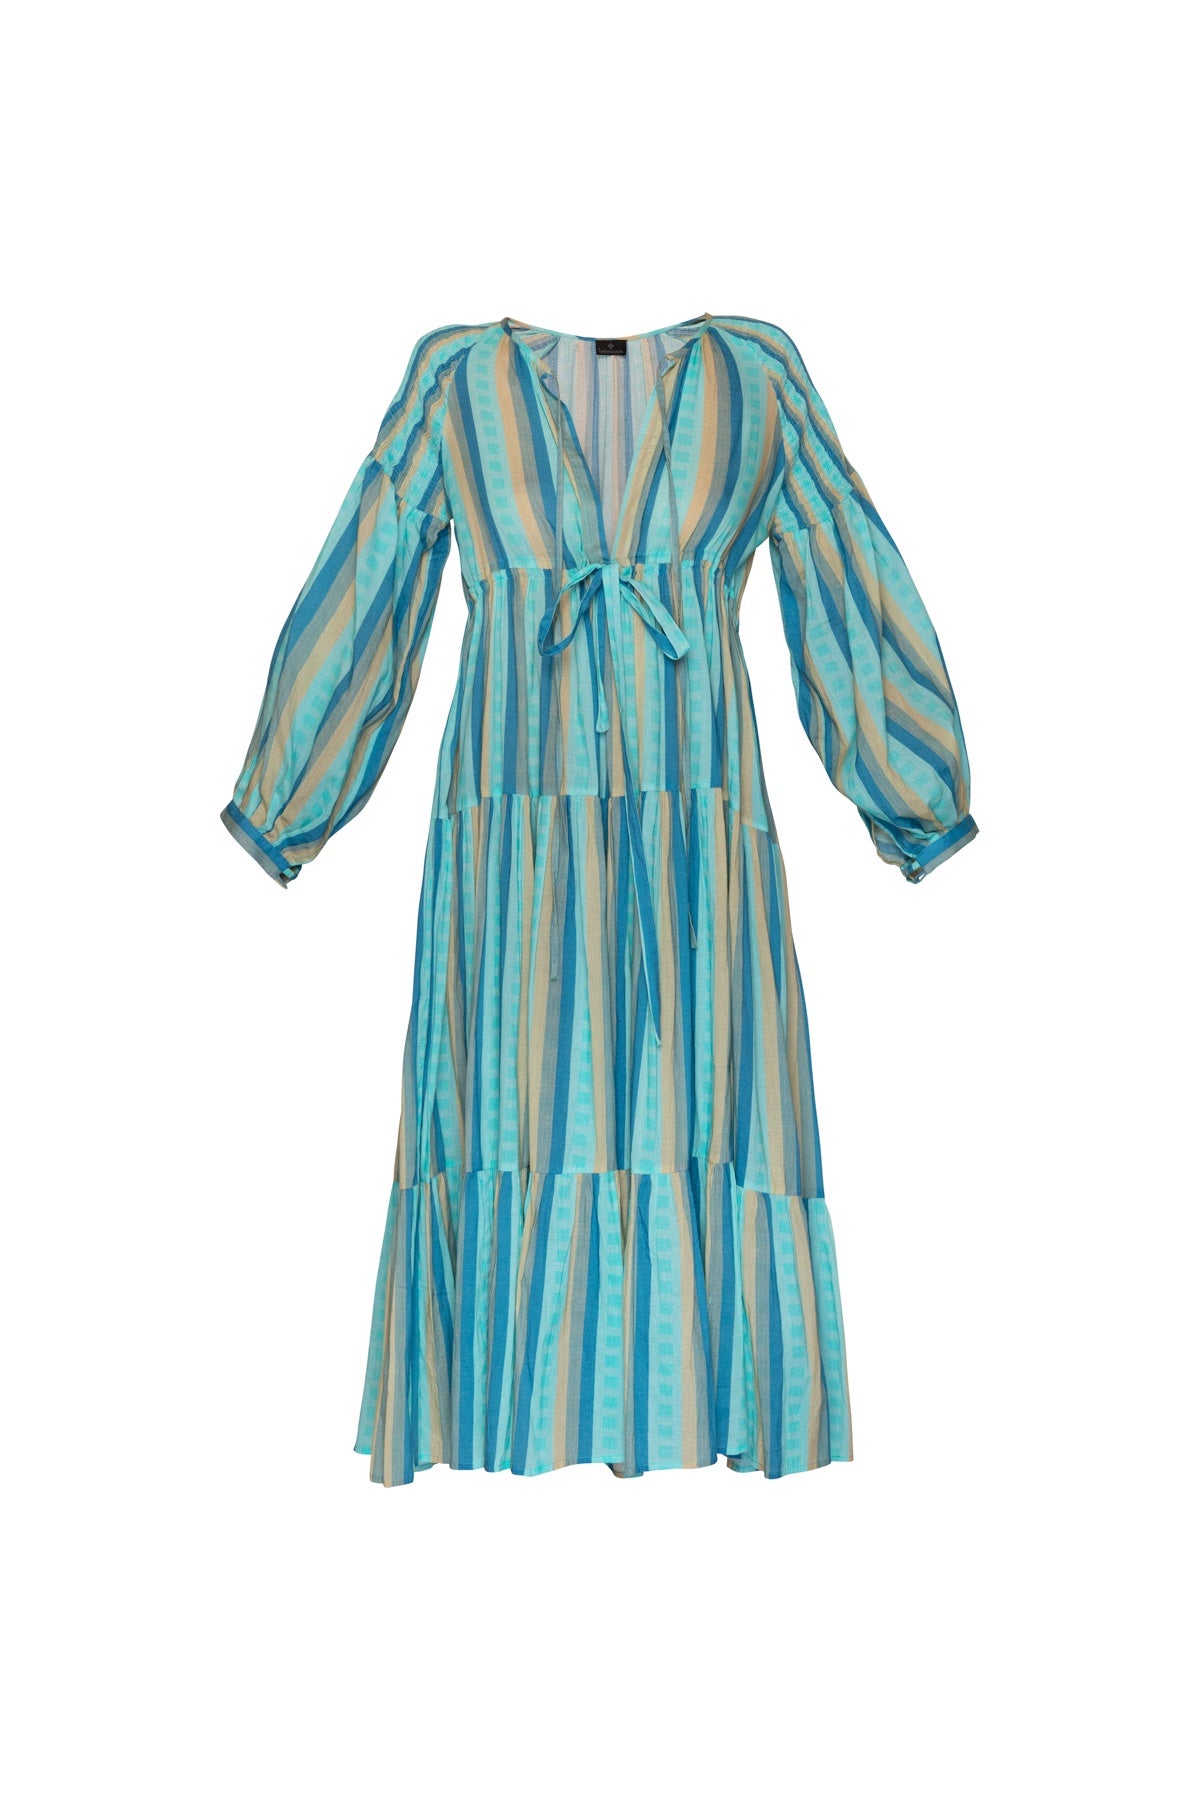 Cotton Sun Dress - Blue Stripes